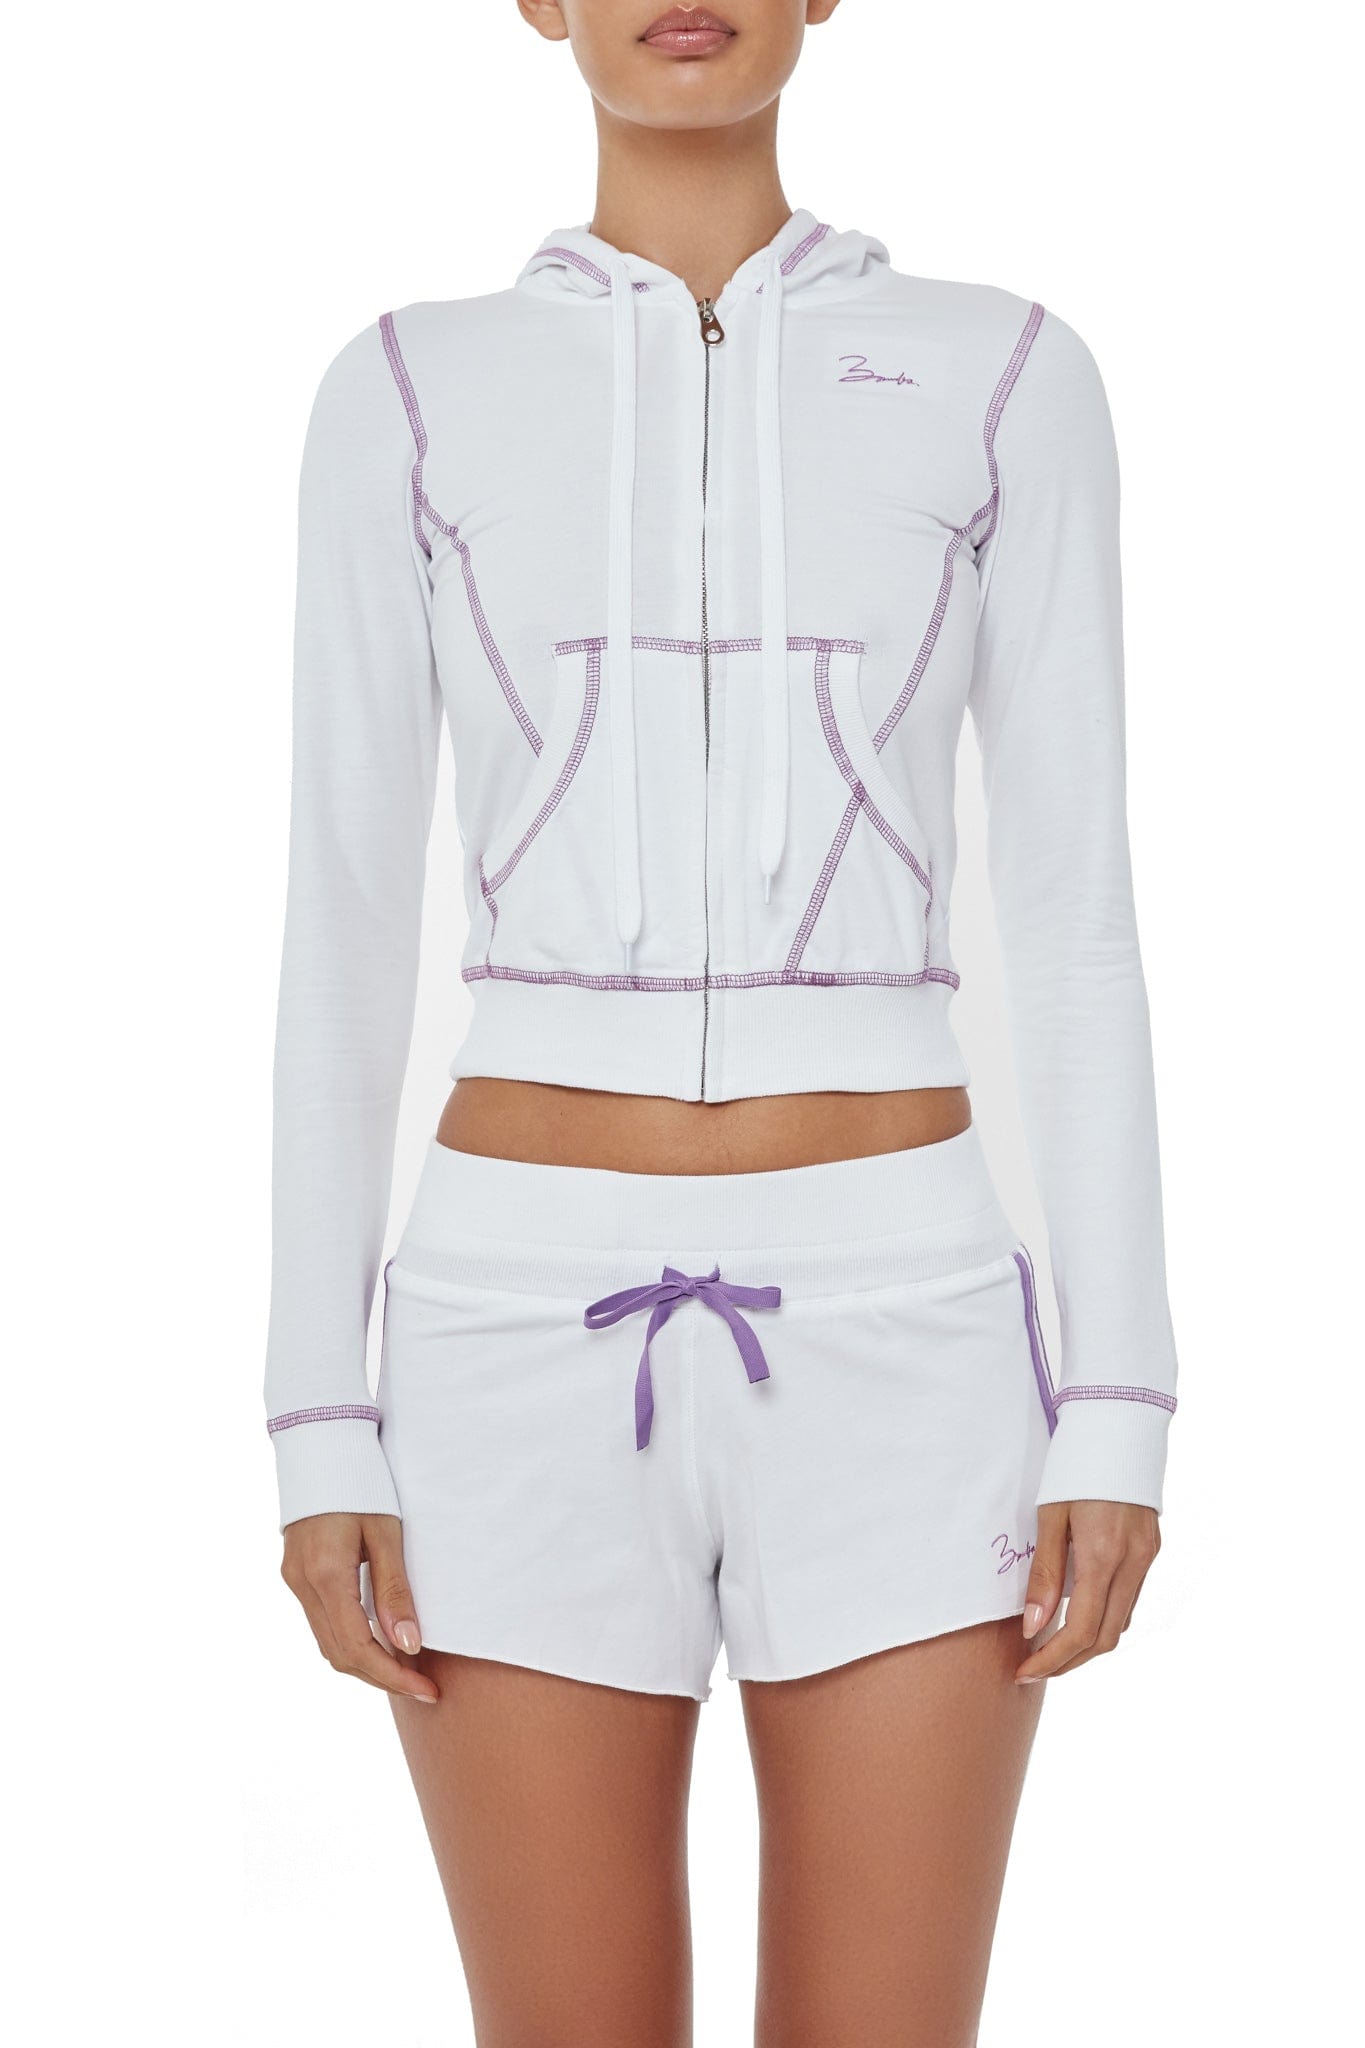 ESPRITE shorts- bianco/ violet - BĀMBASWIMAUS